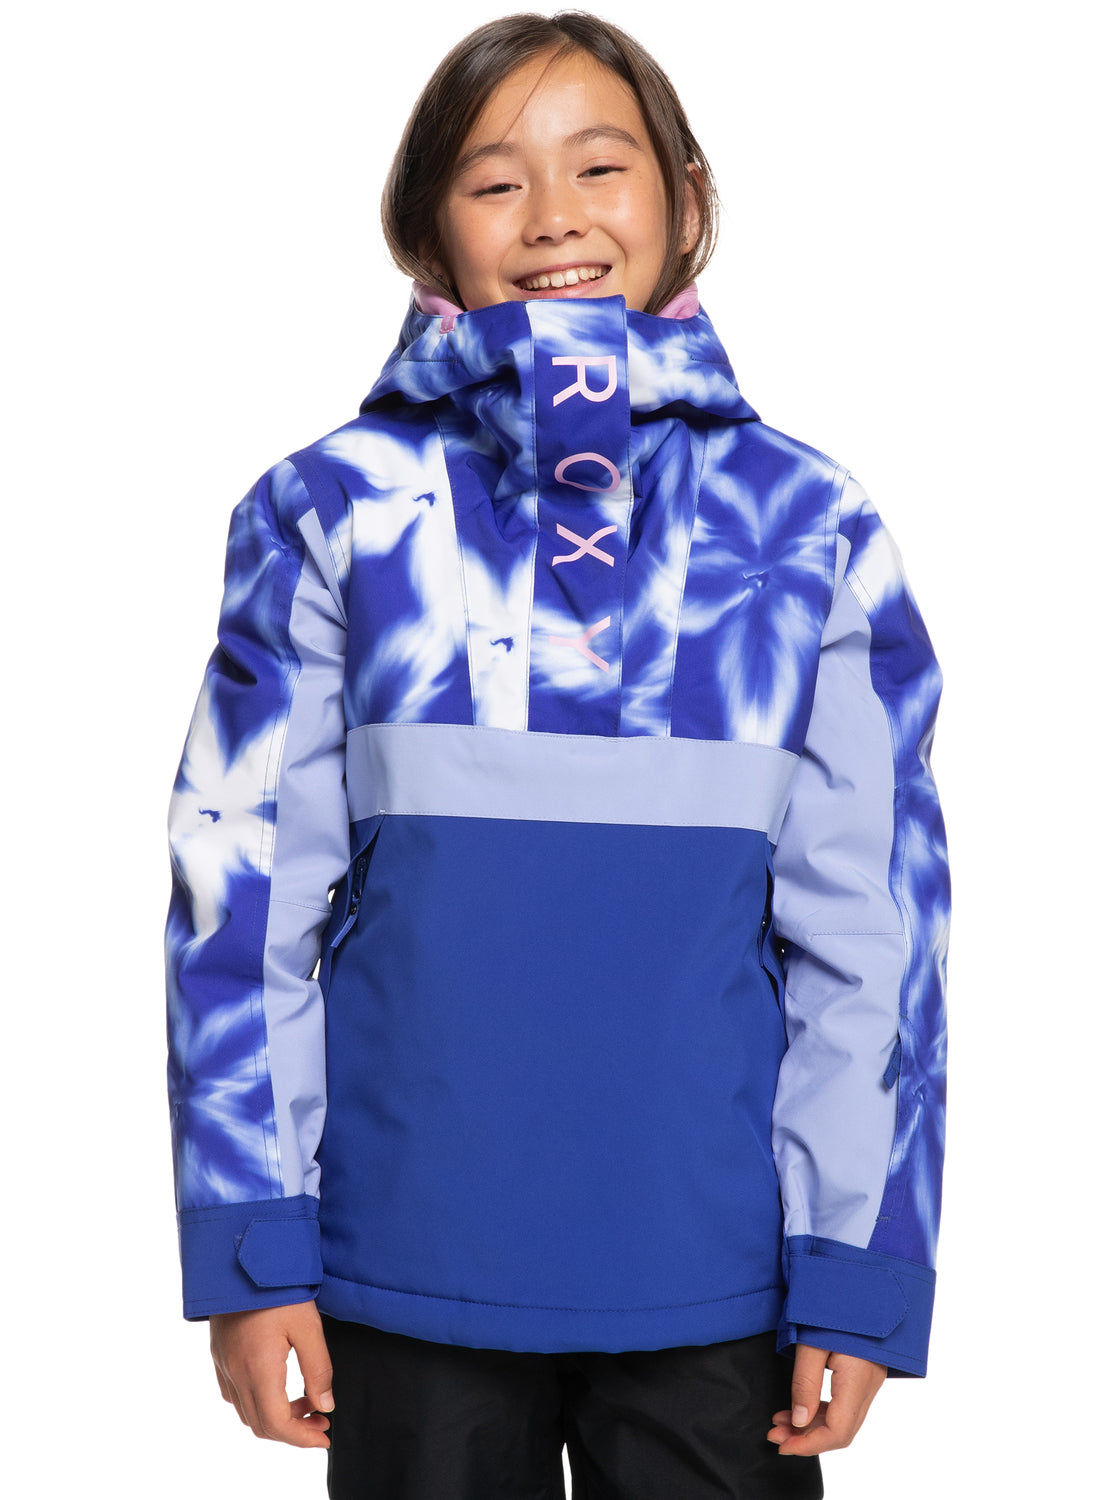 Girls 4-16 Shelter Technical Snow Jacket - Bluing Frozen Flower